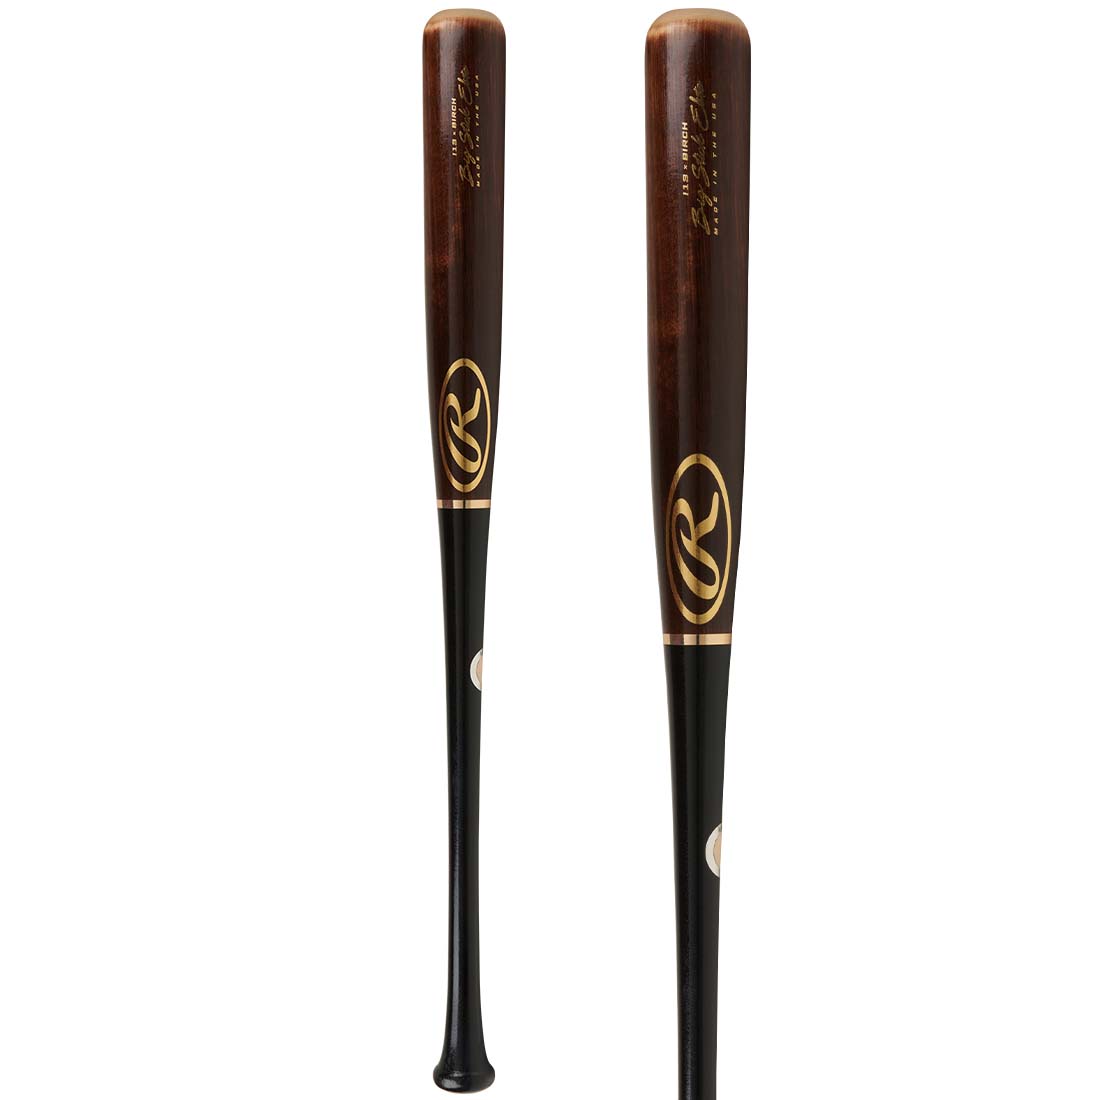 Louisville Slugger I13 Maple Wood Baseball Bat, 34 